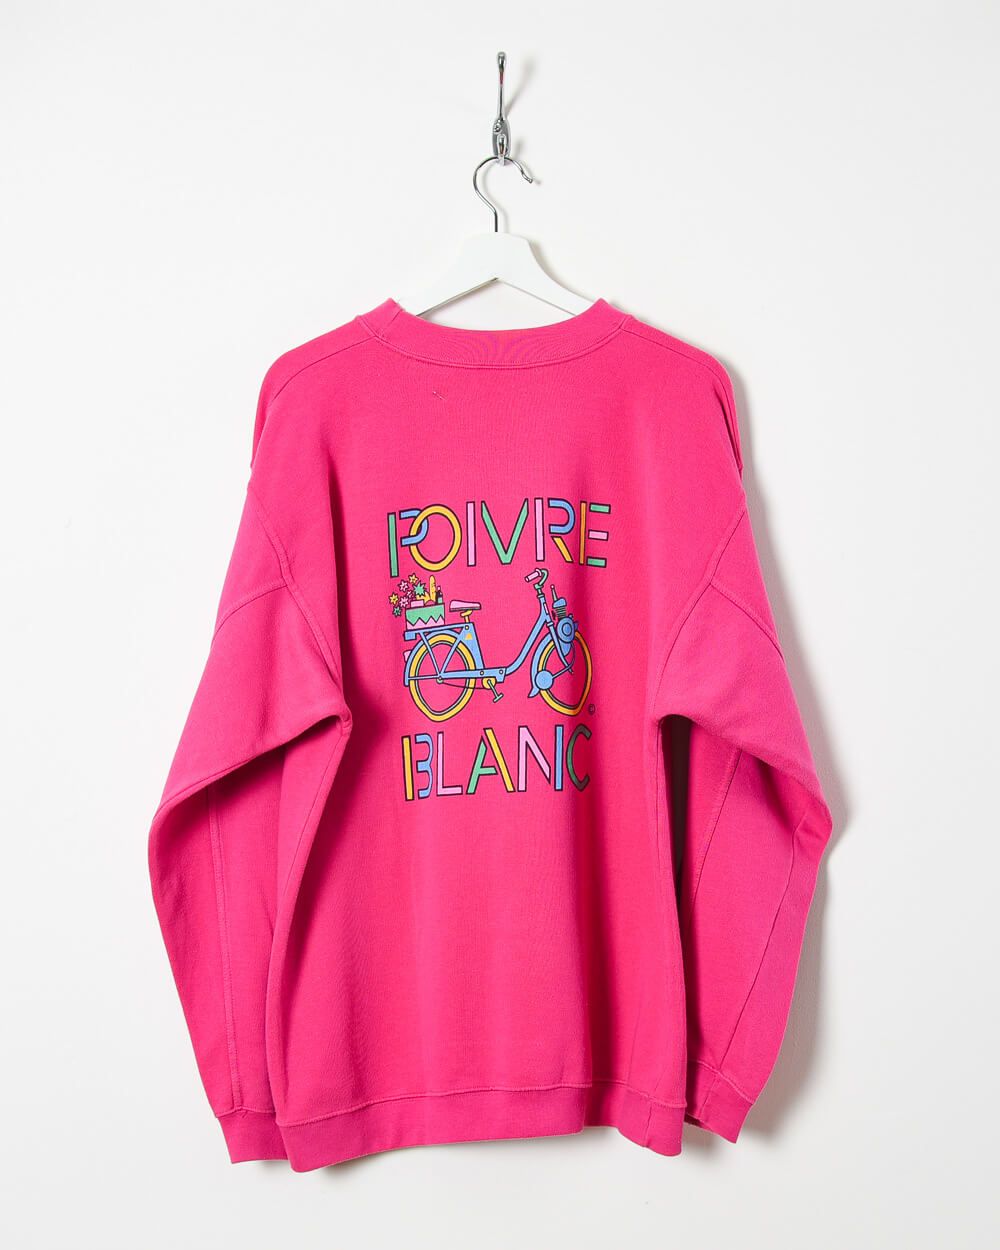 Vintage 90s Cotton Pink Poivre Blanc Sweatshirt - Medium – Domno Vintage